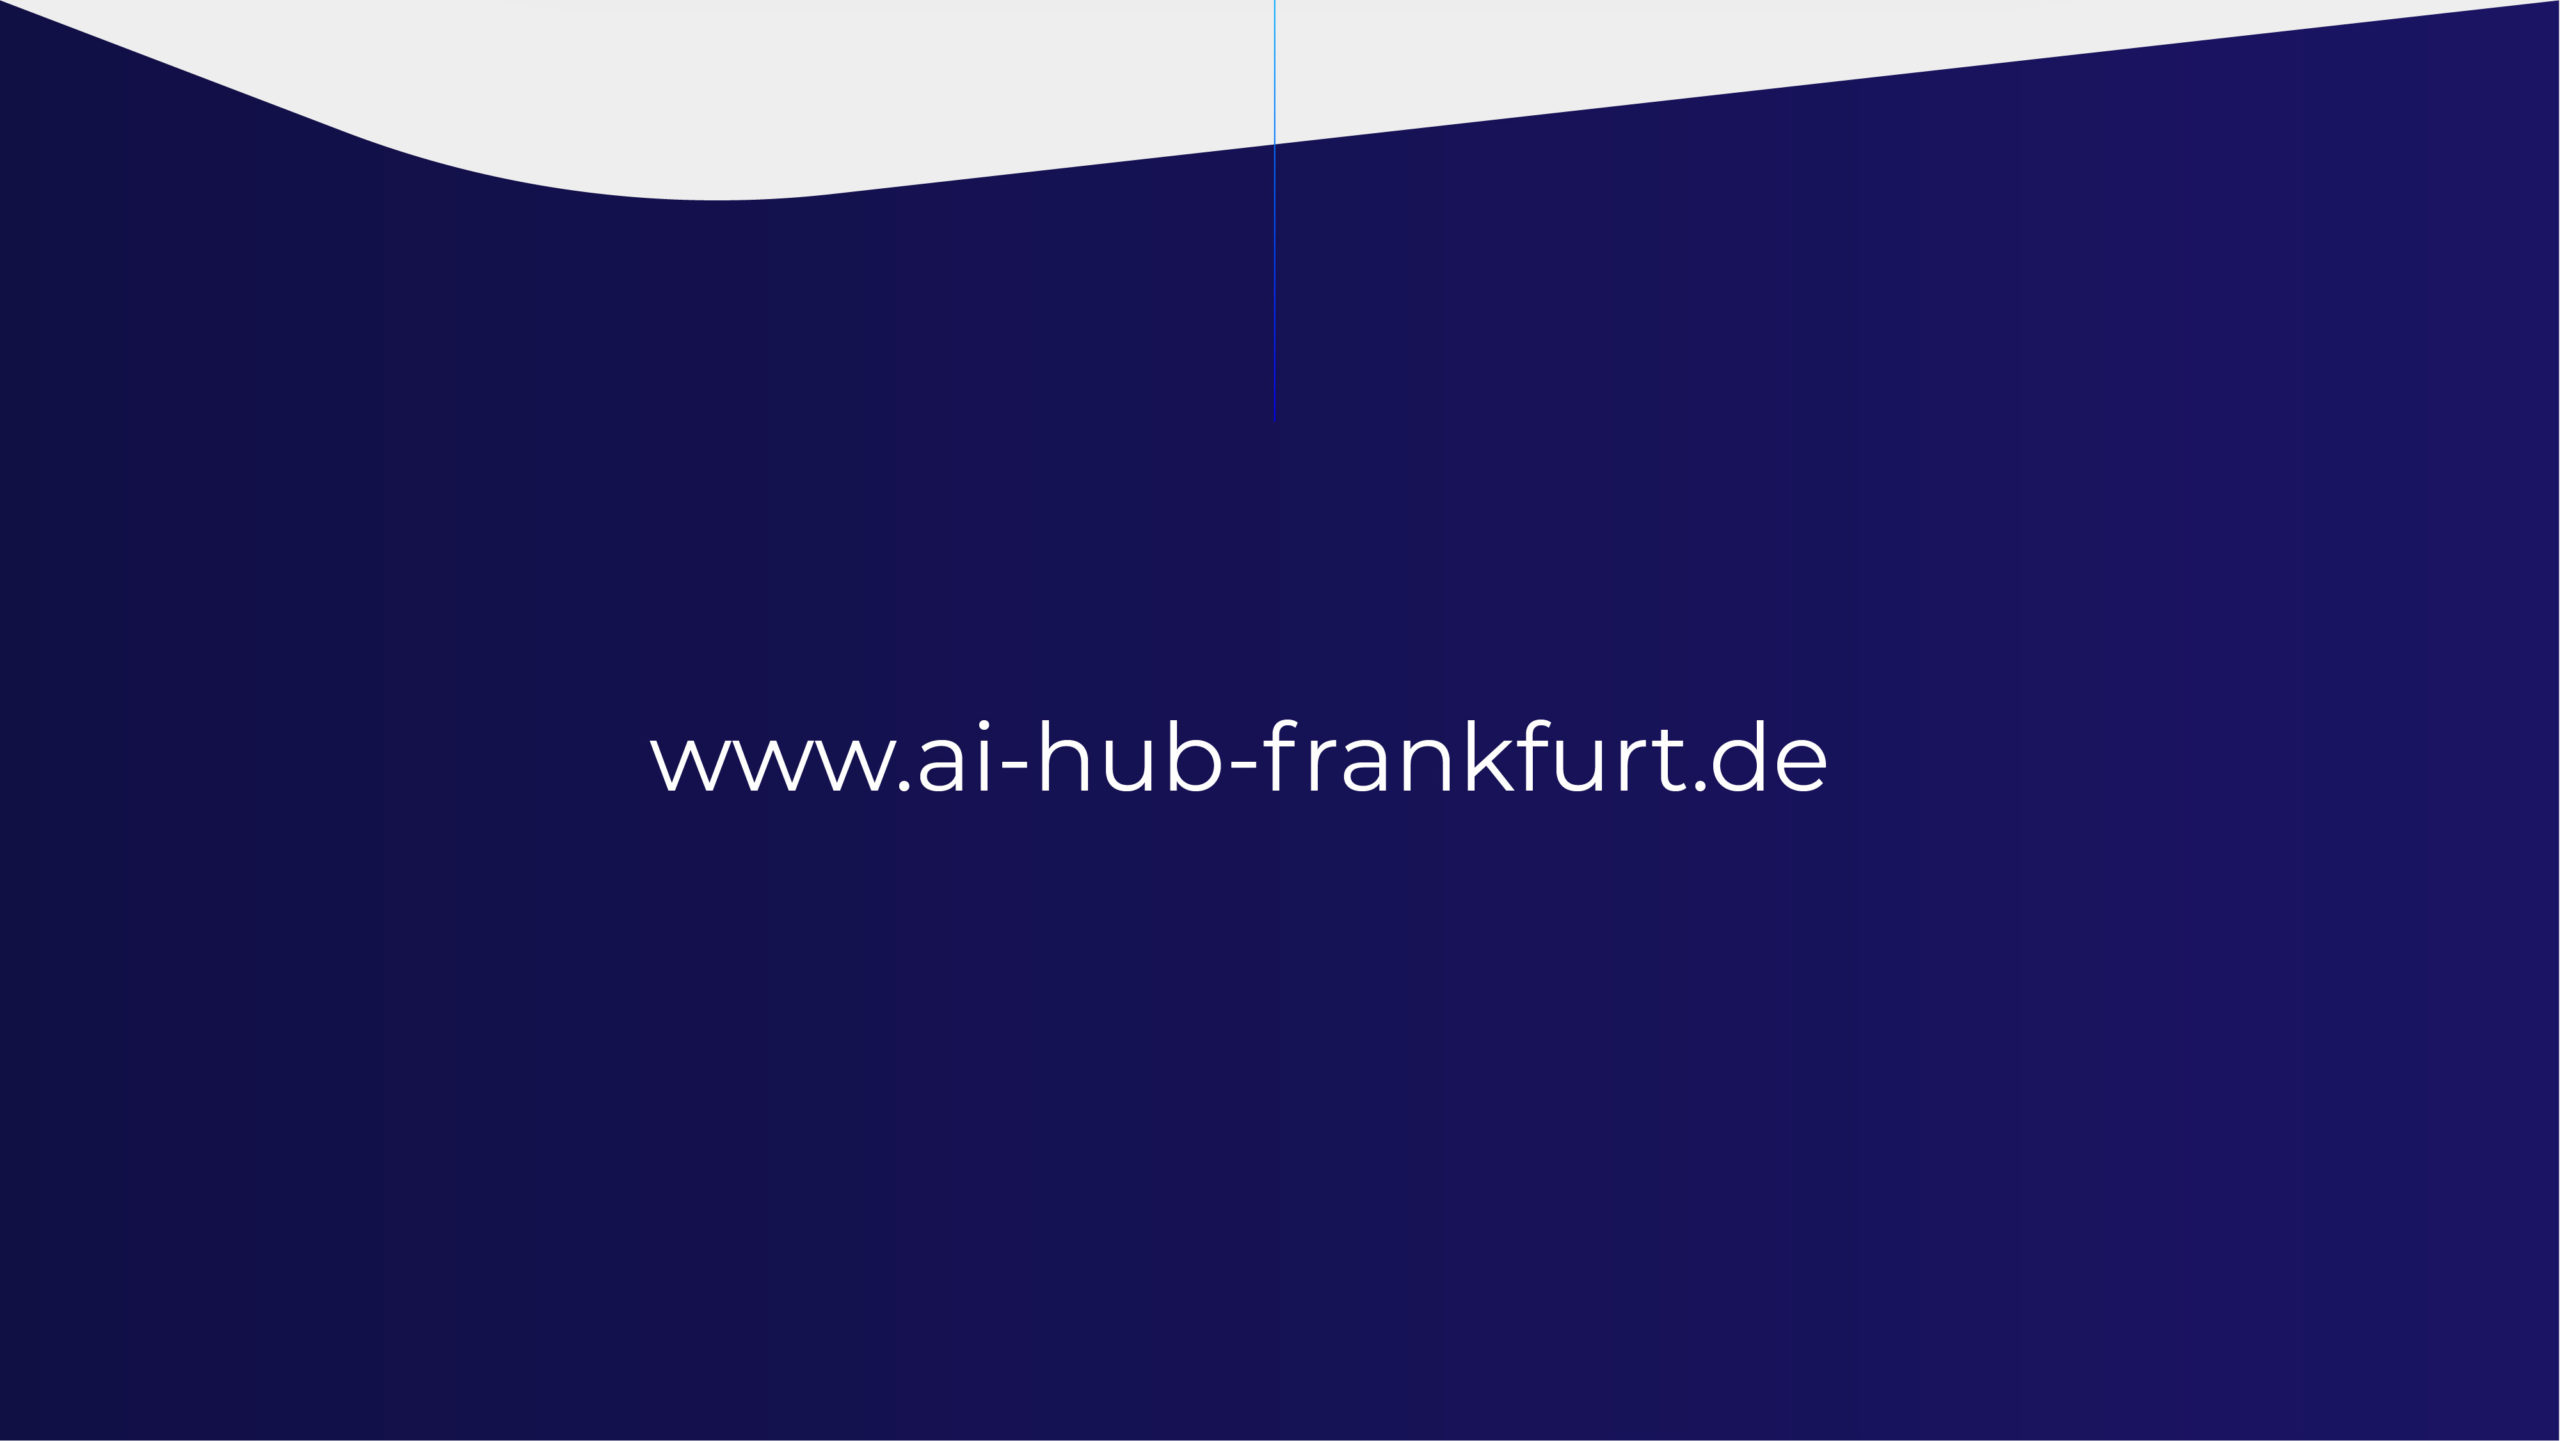 AI HUB Frankfurt Logo & Corporate Design, UX/UI, Interface Design, Corporate Design Agentur, Designagentur Frankfurt, Grafikdesign, Logodesign, Branding